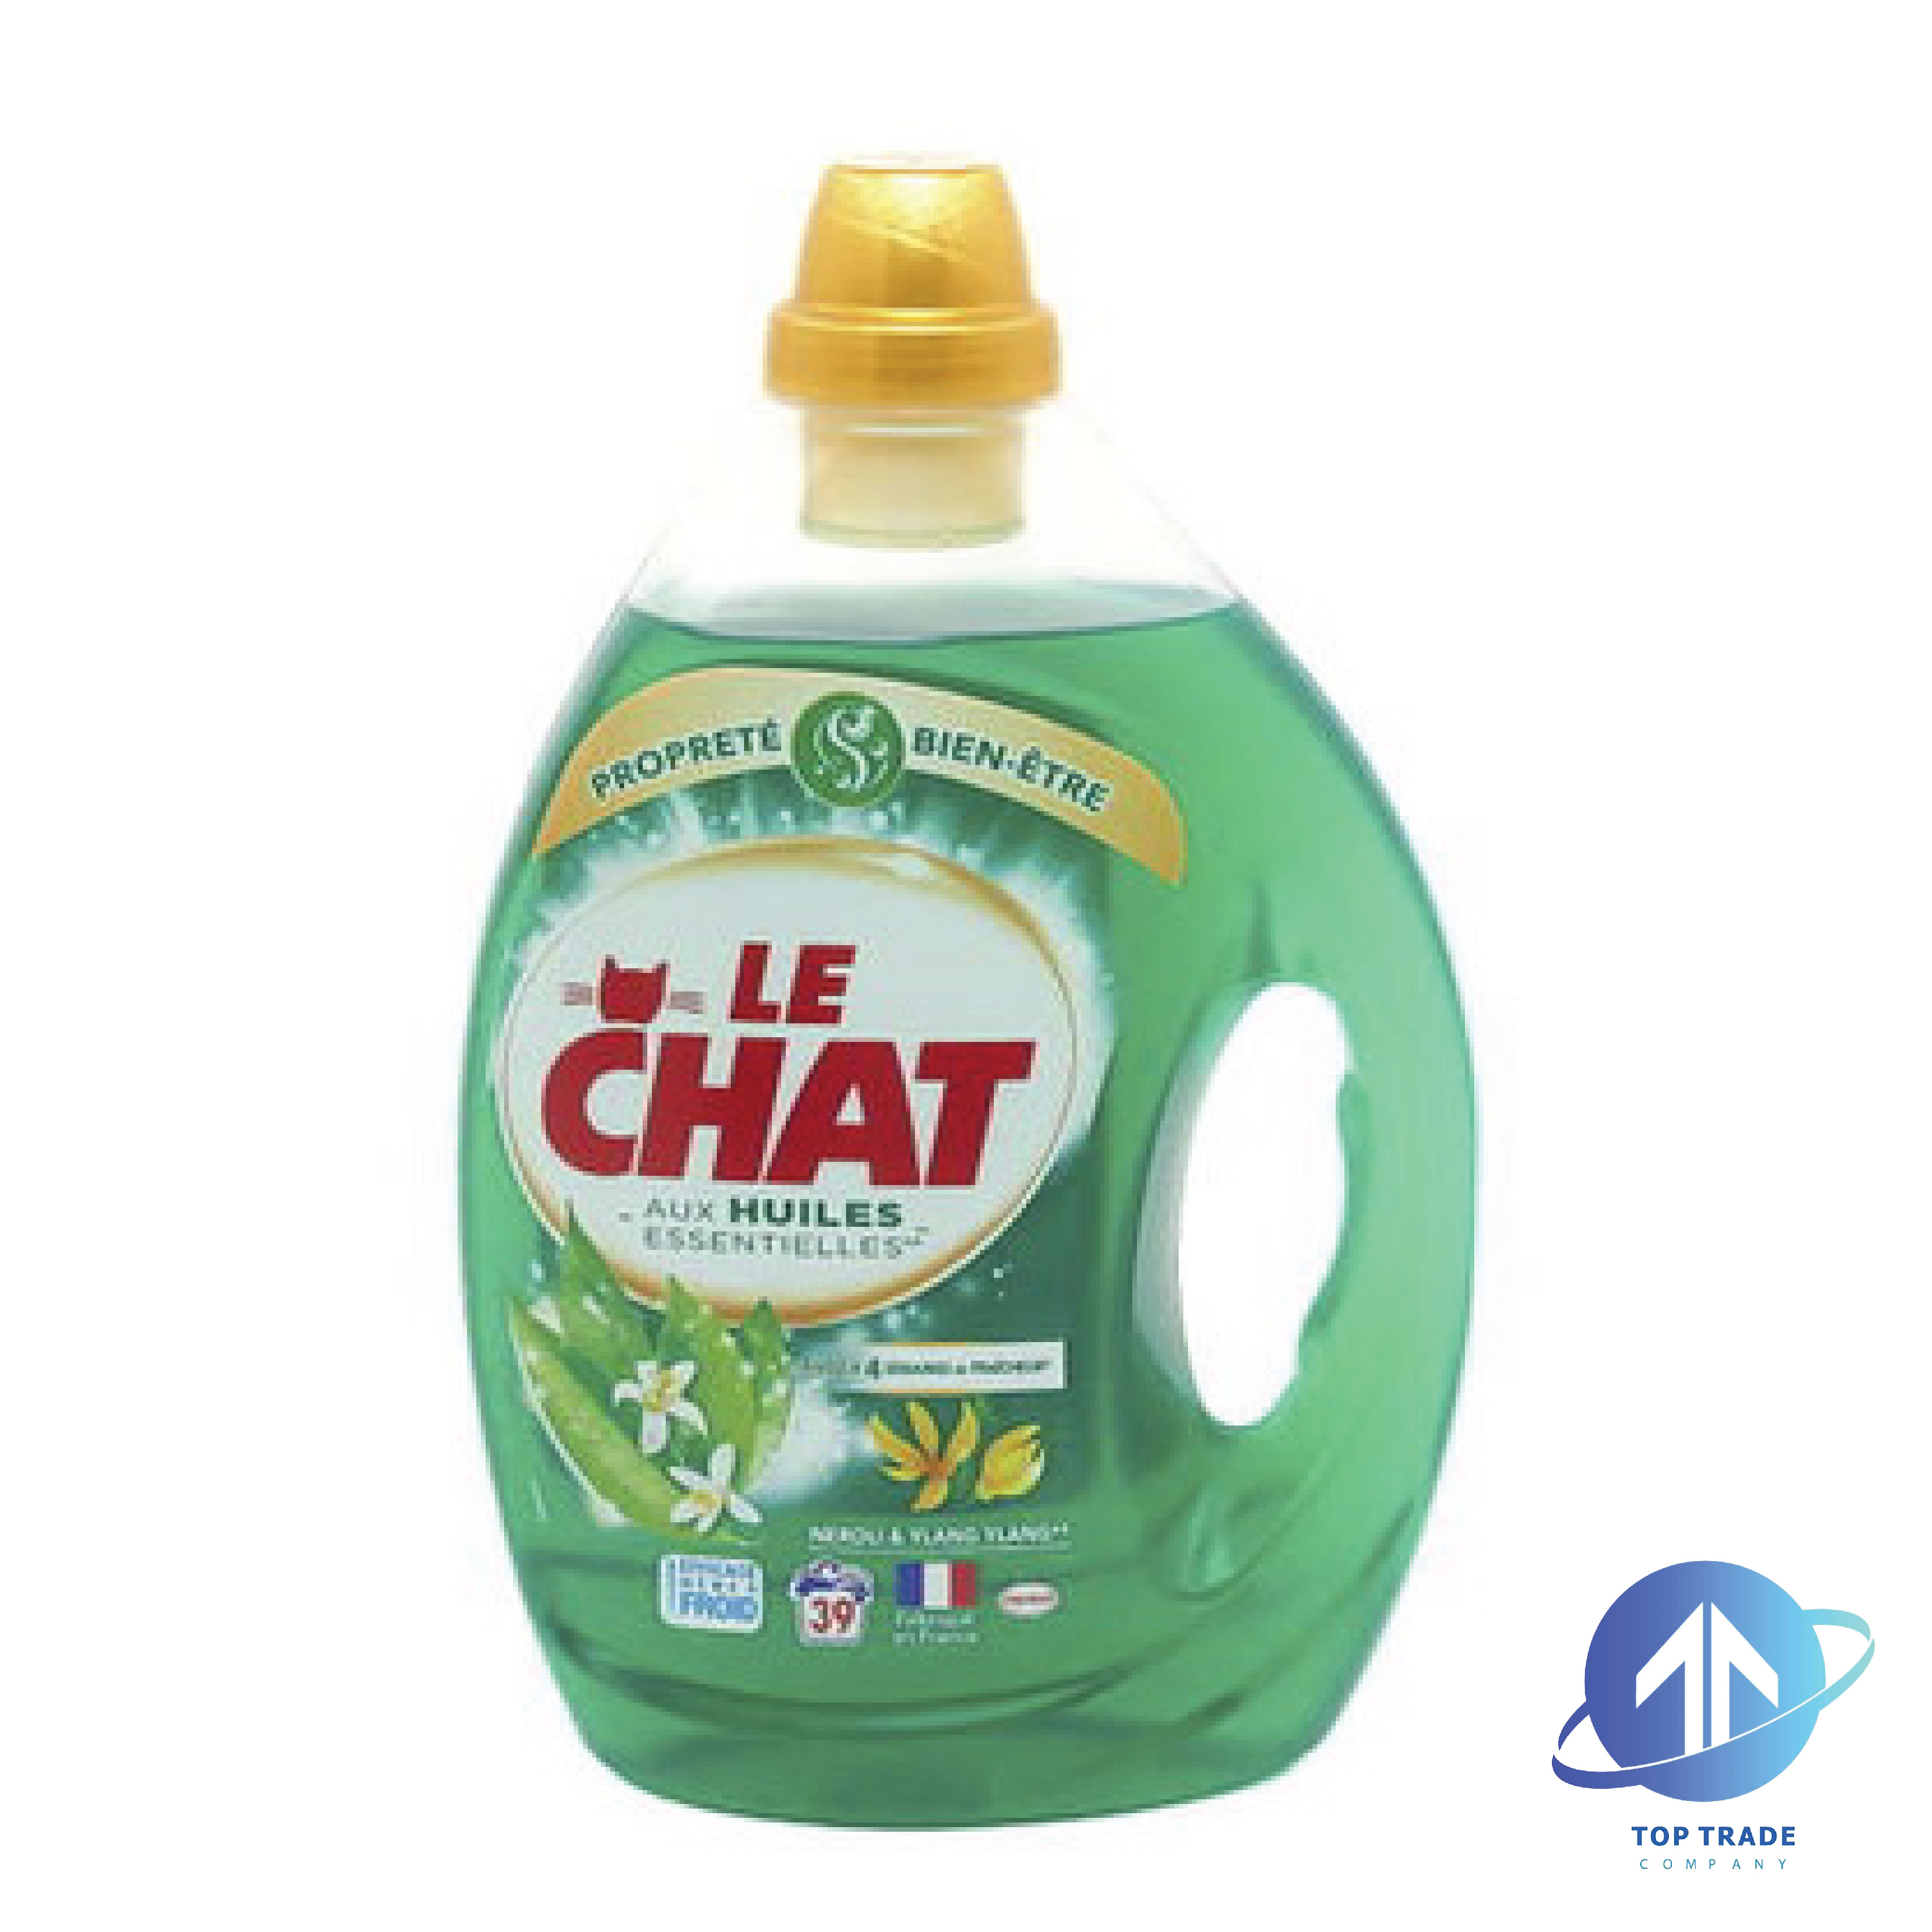 Le Chat washing liquid essential oils 1,95L/39sc